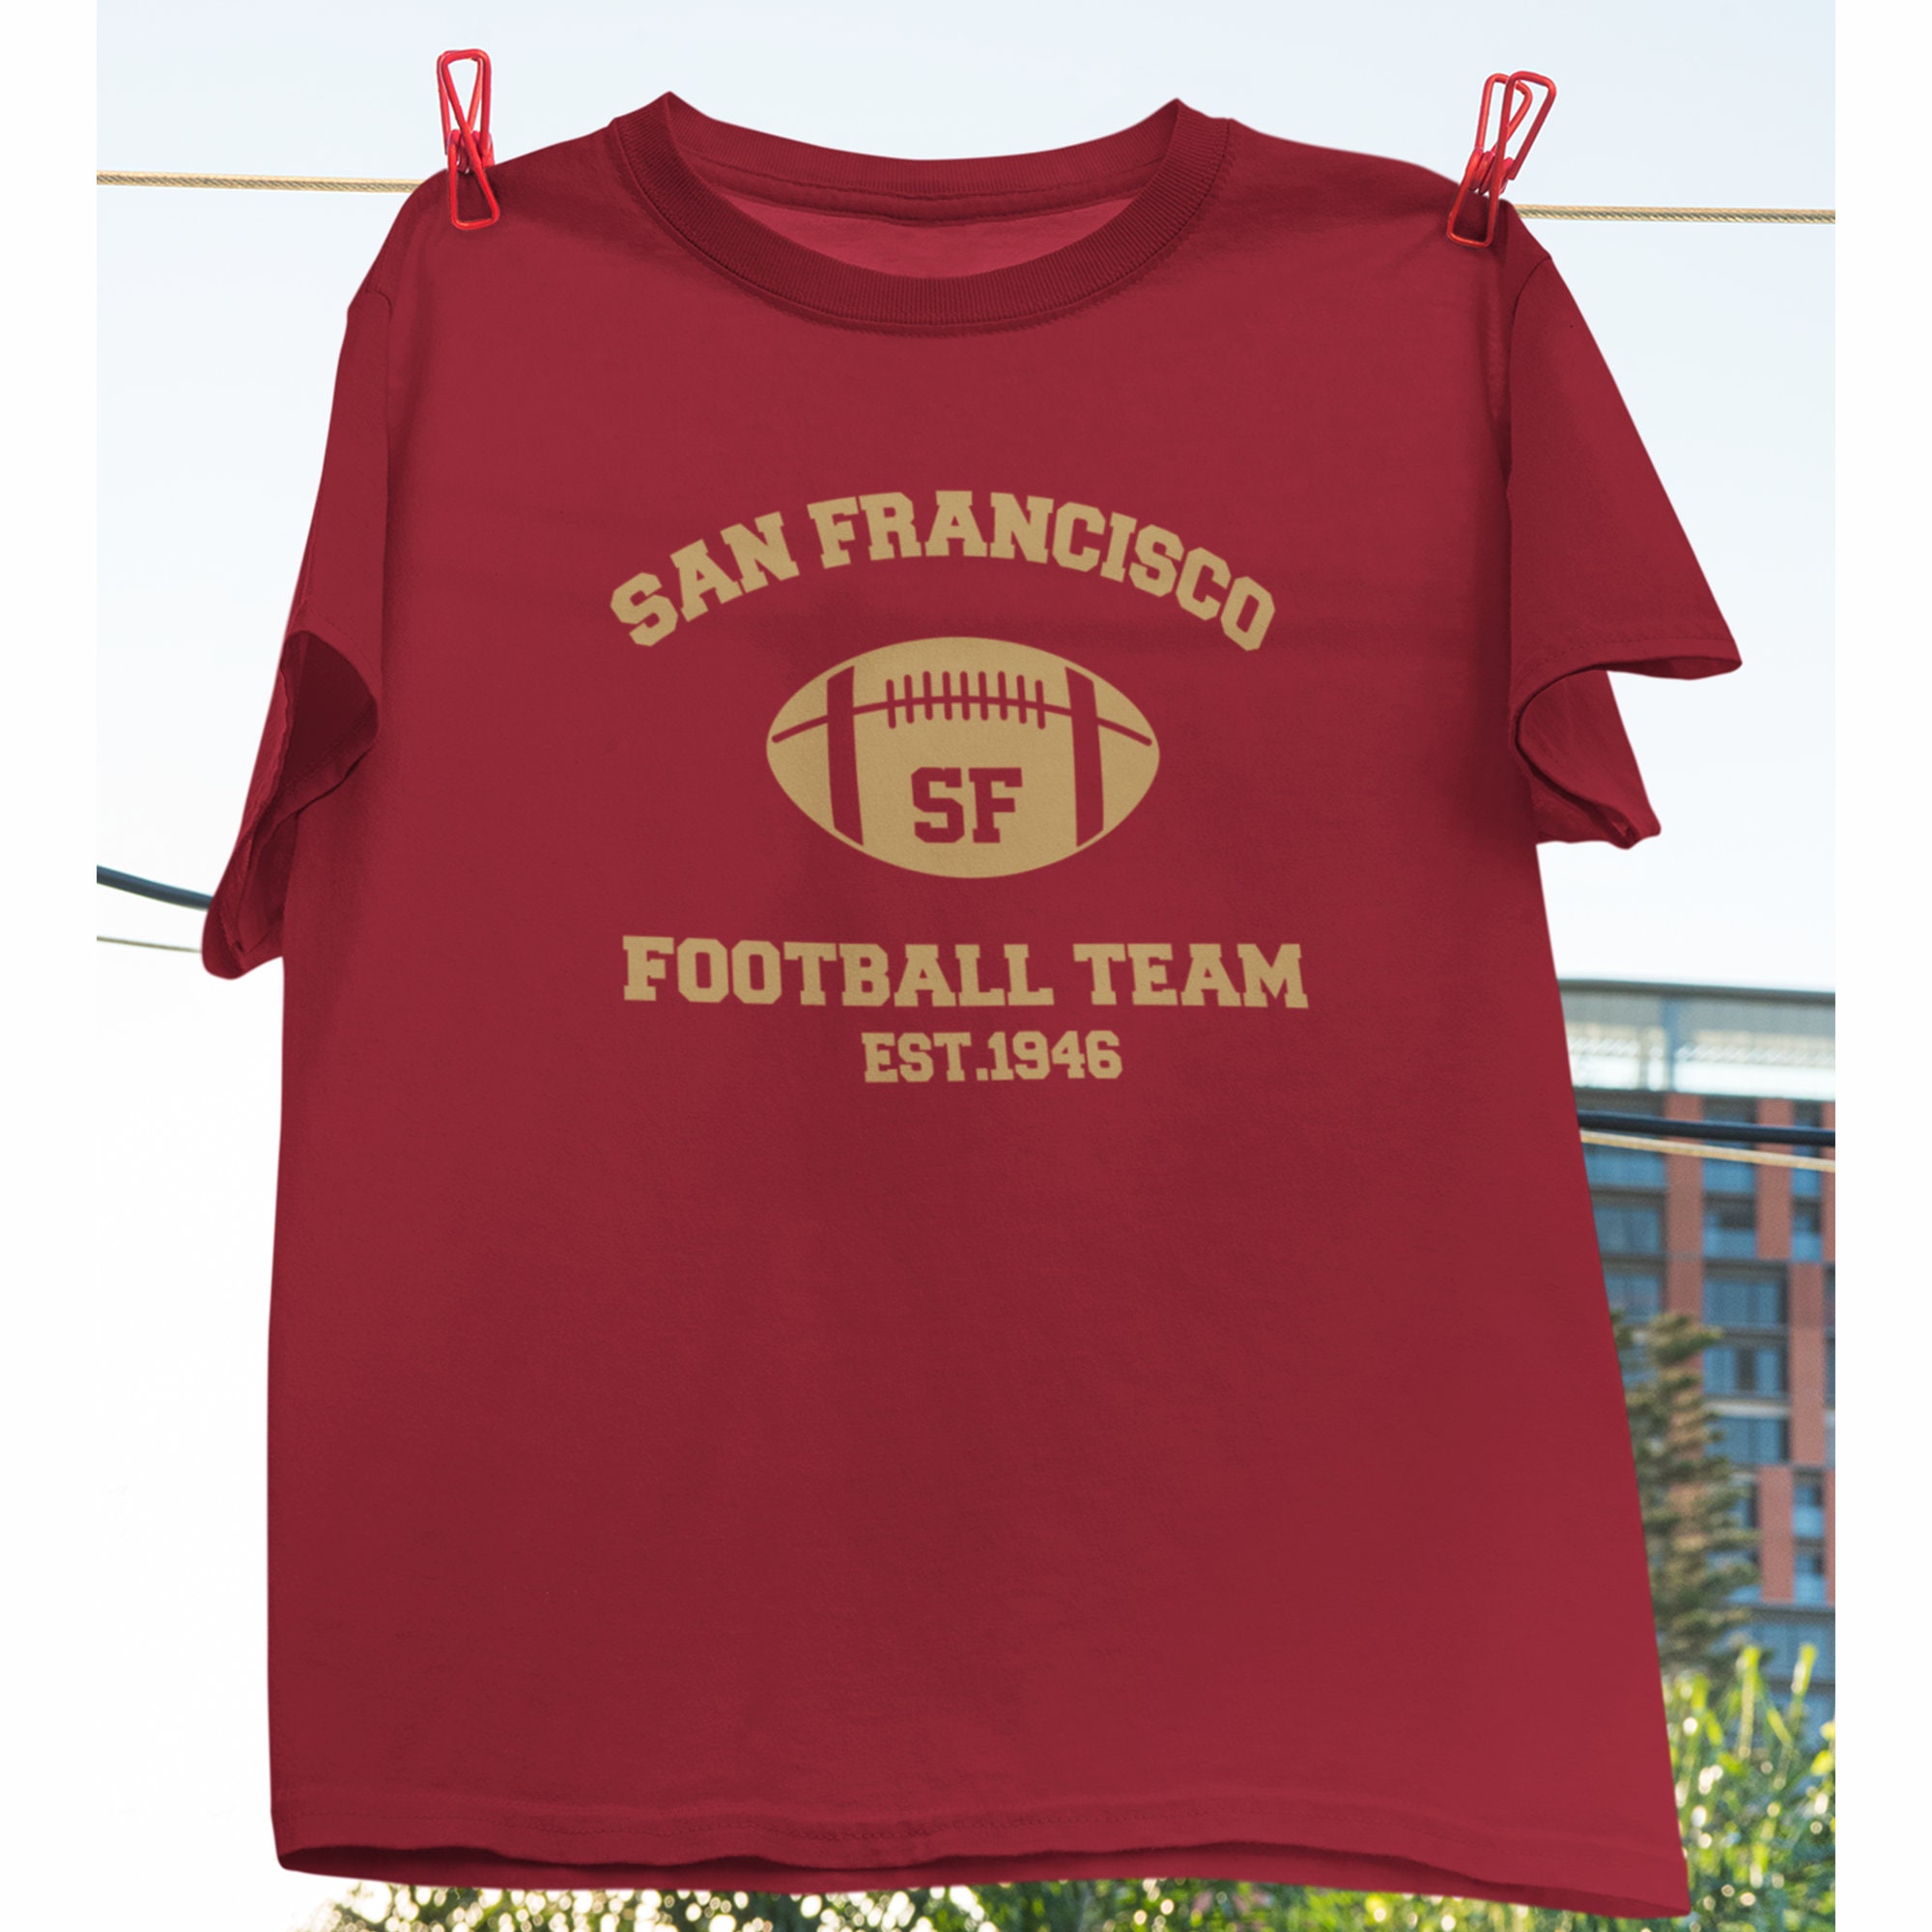 San Francisco football team est 1946  T-Shirt